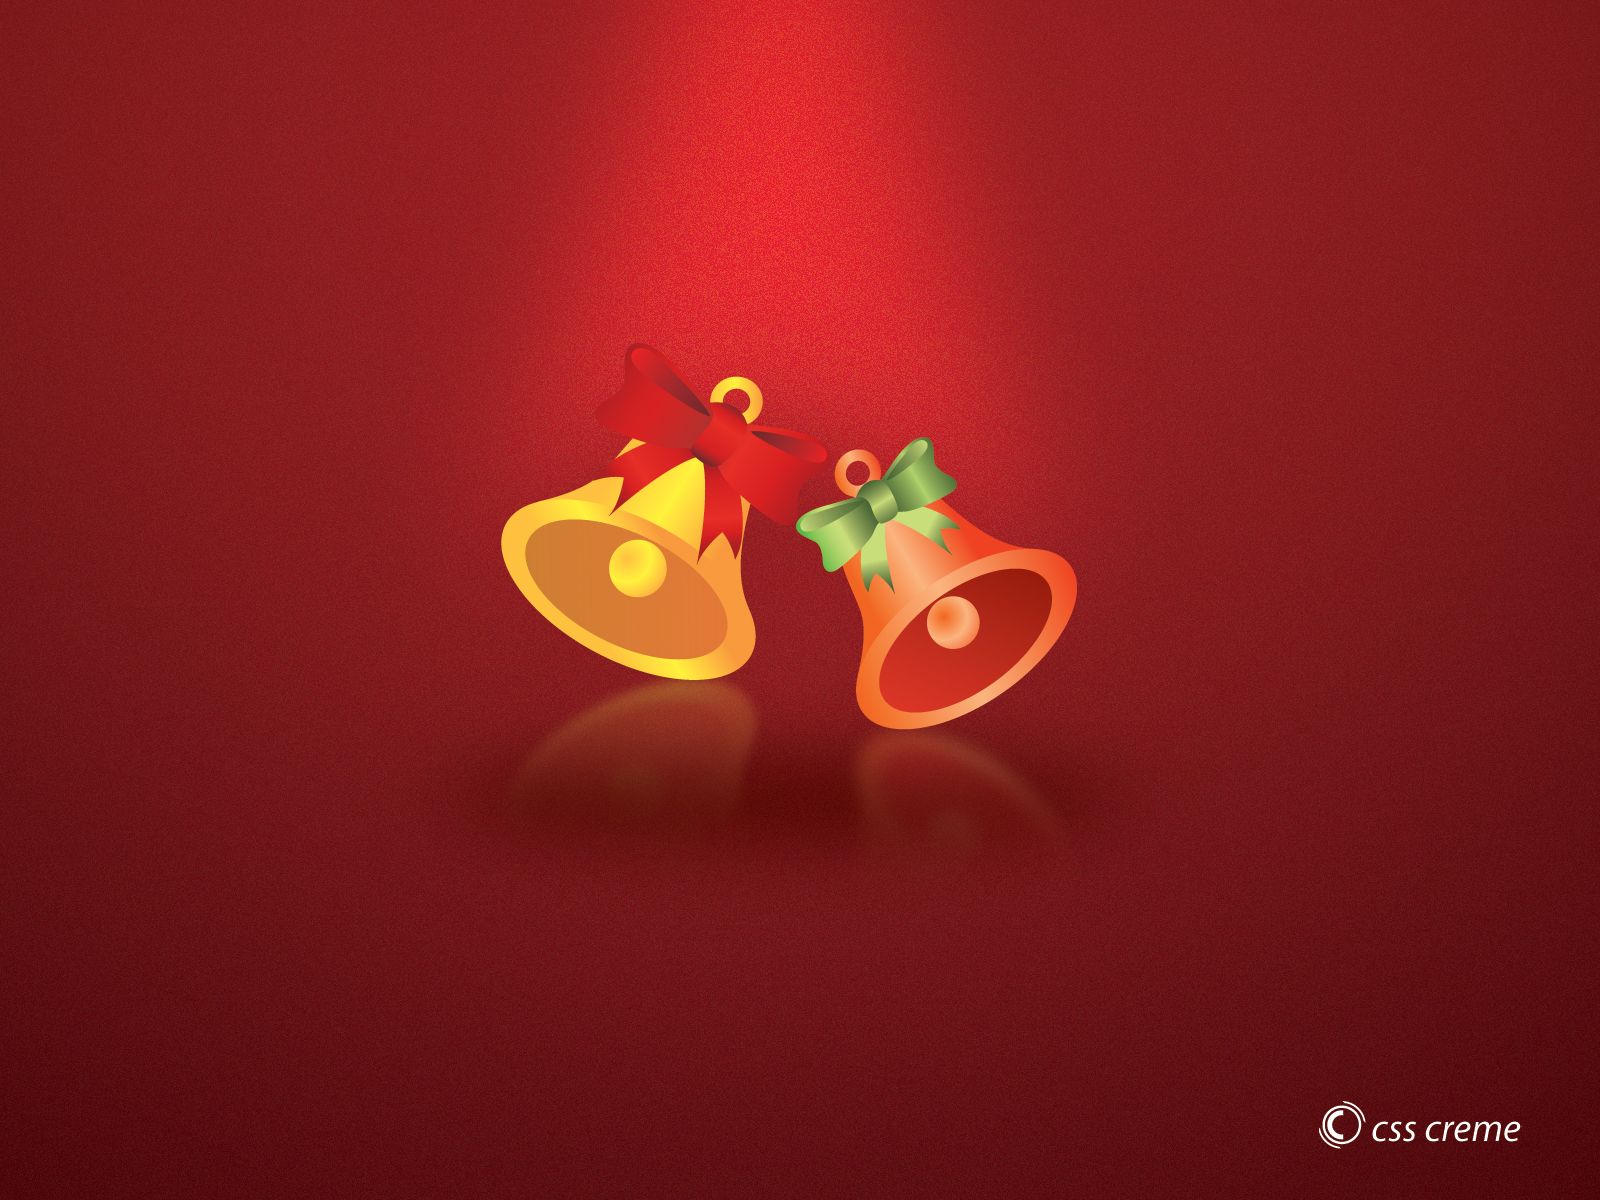 Free Animated Christmas Wallpaper for Desktop